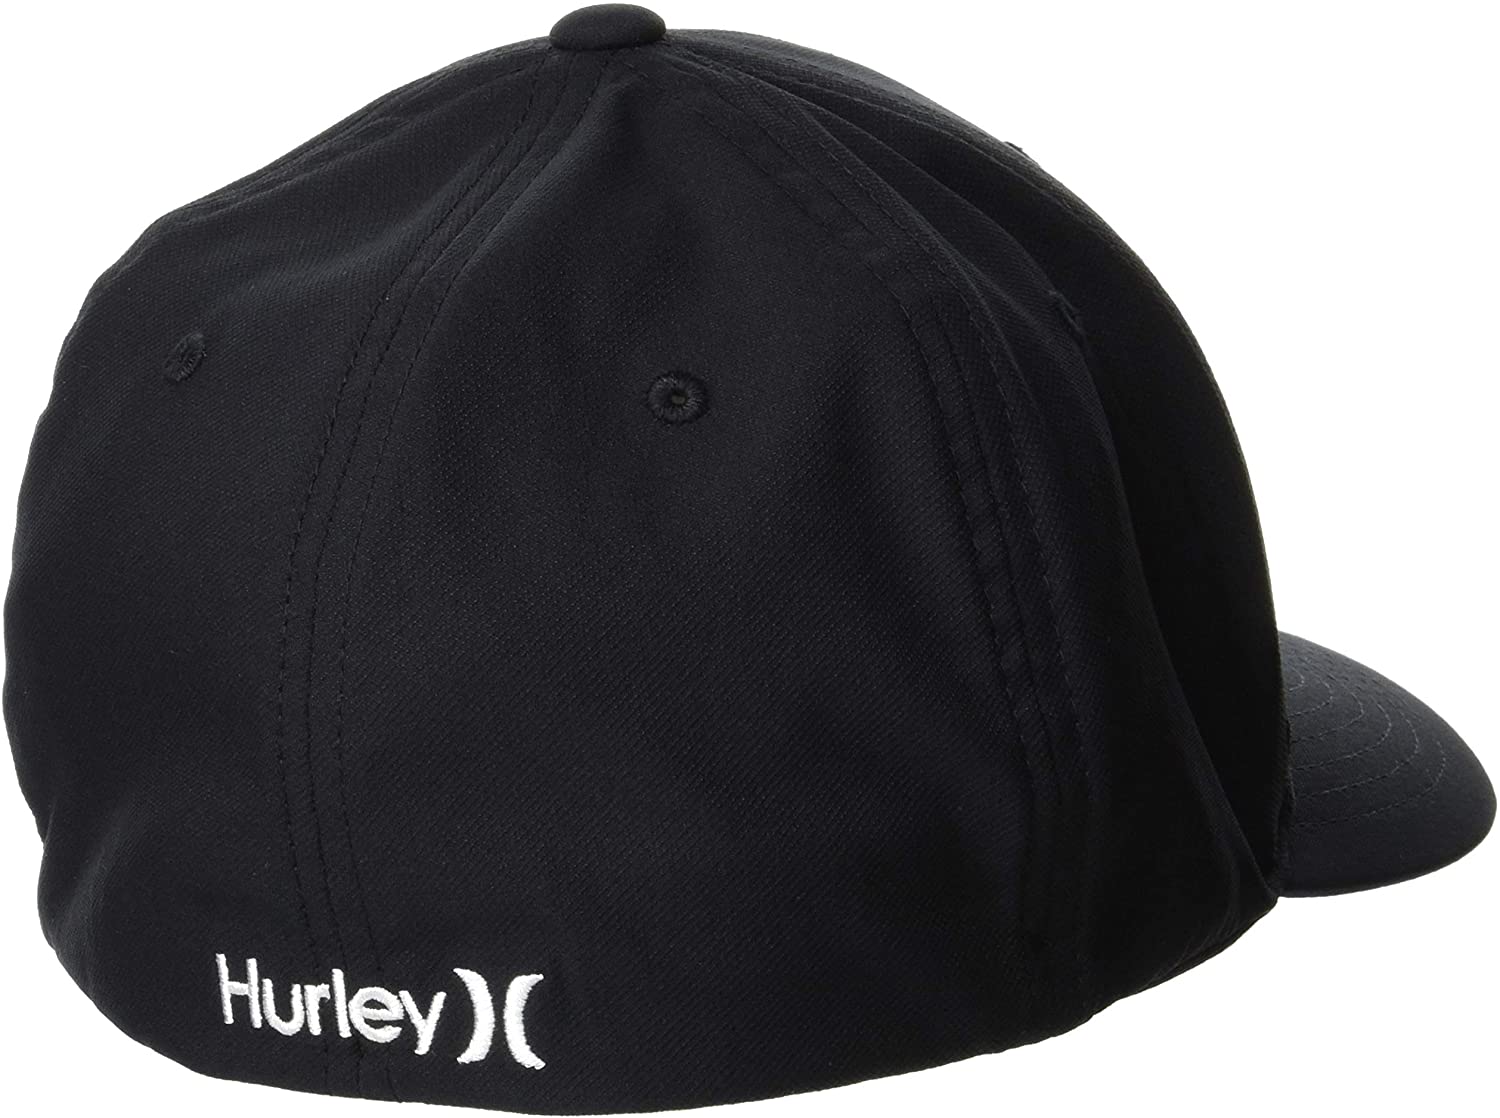 Hurley Mens Dri-fit One & Only Flexfit Baseball Cap